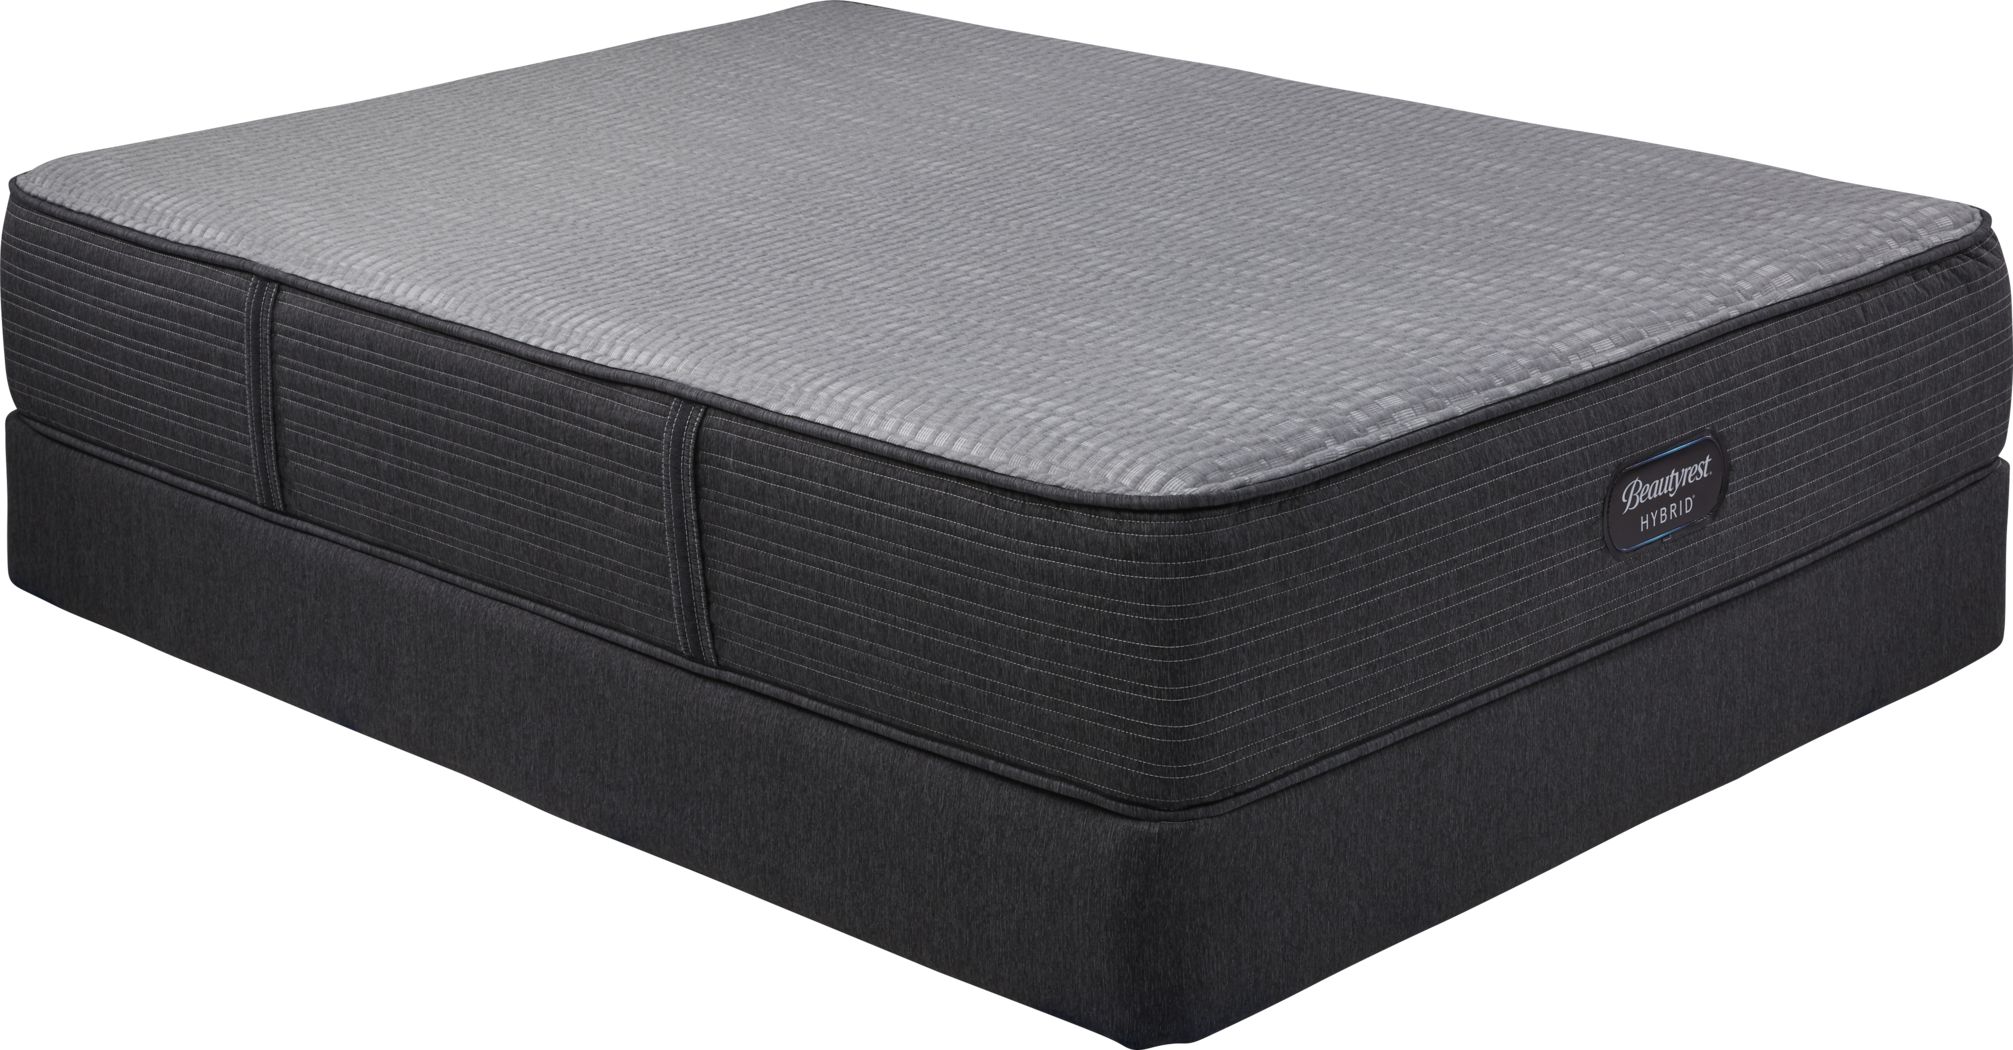 low profile queen box mattress